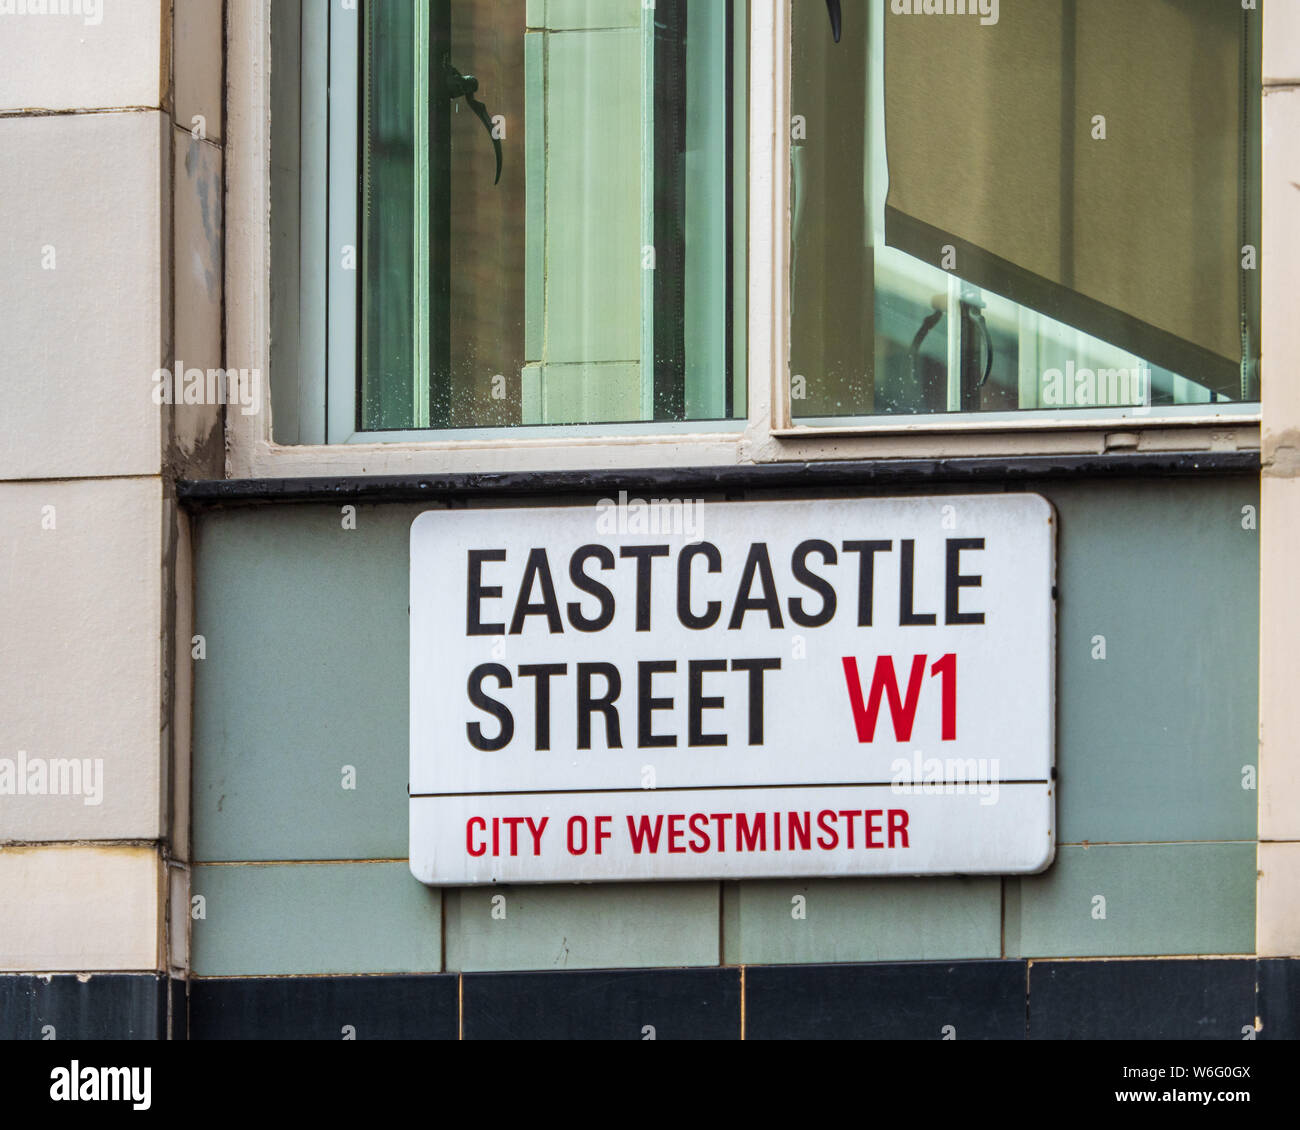 Eastcastle Street London W1 - Calle Signo de Fitzrovia Eastcastle St en el distrito del West End de Londres Foto de stock